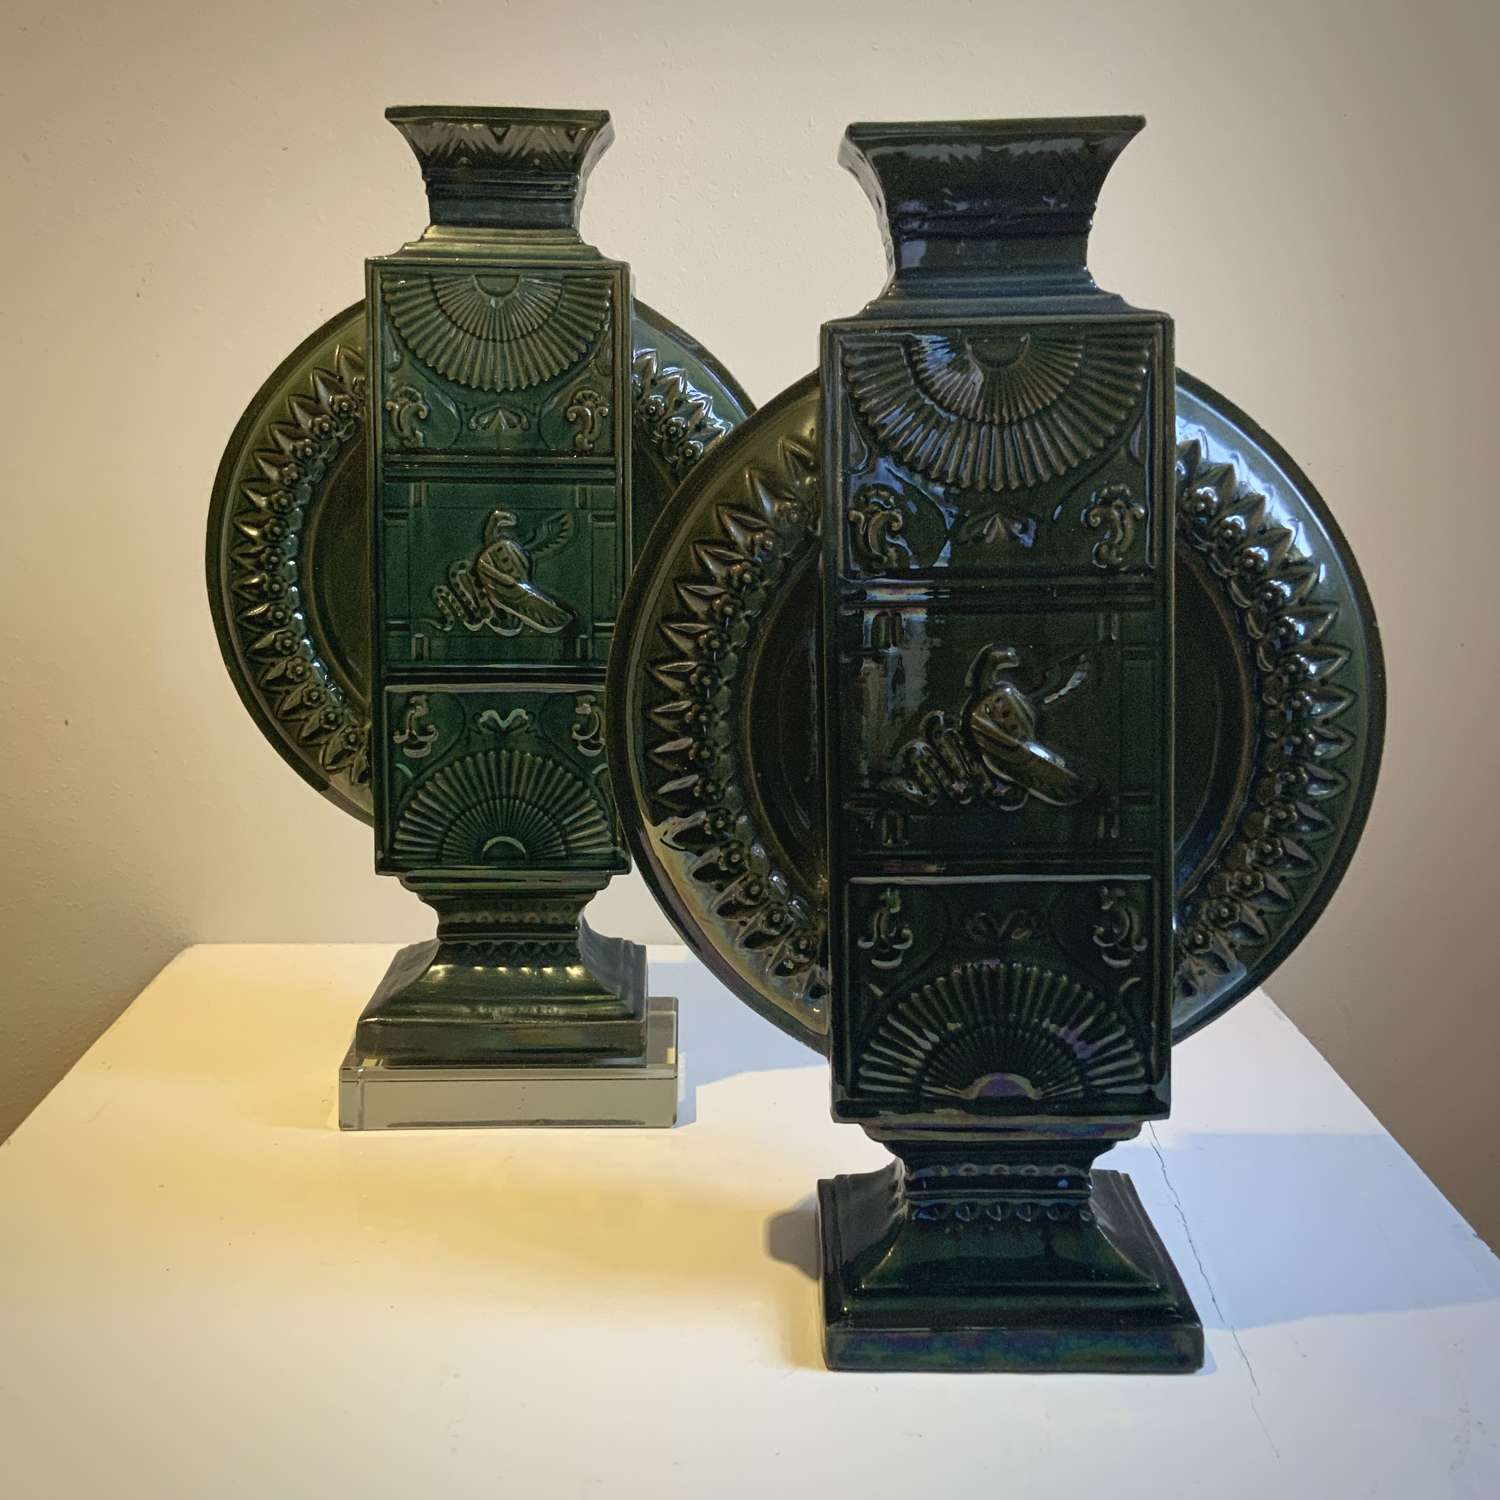 Paul Alfred Isidore LIÉNARD (1841-1901) pair of Egyptian Revival vases